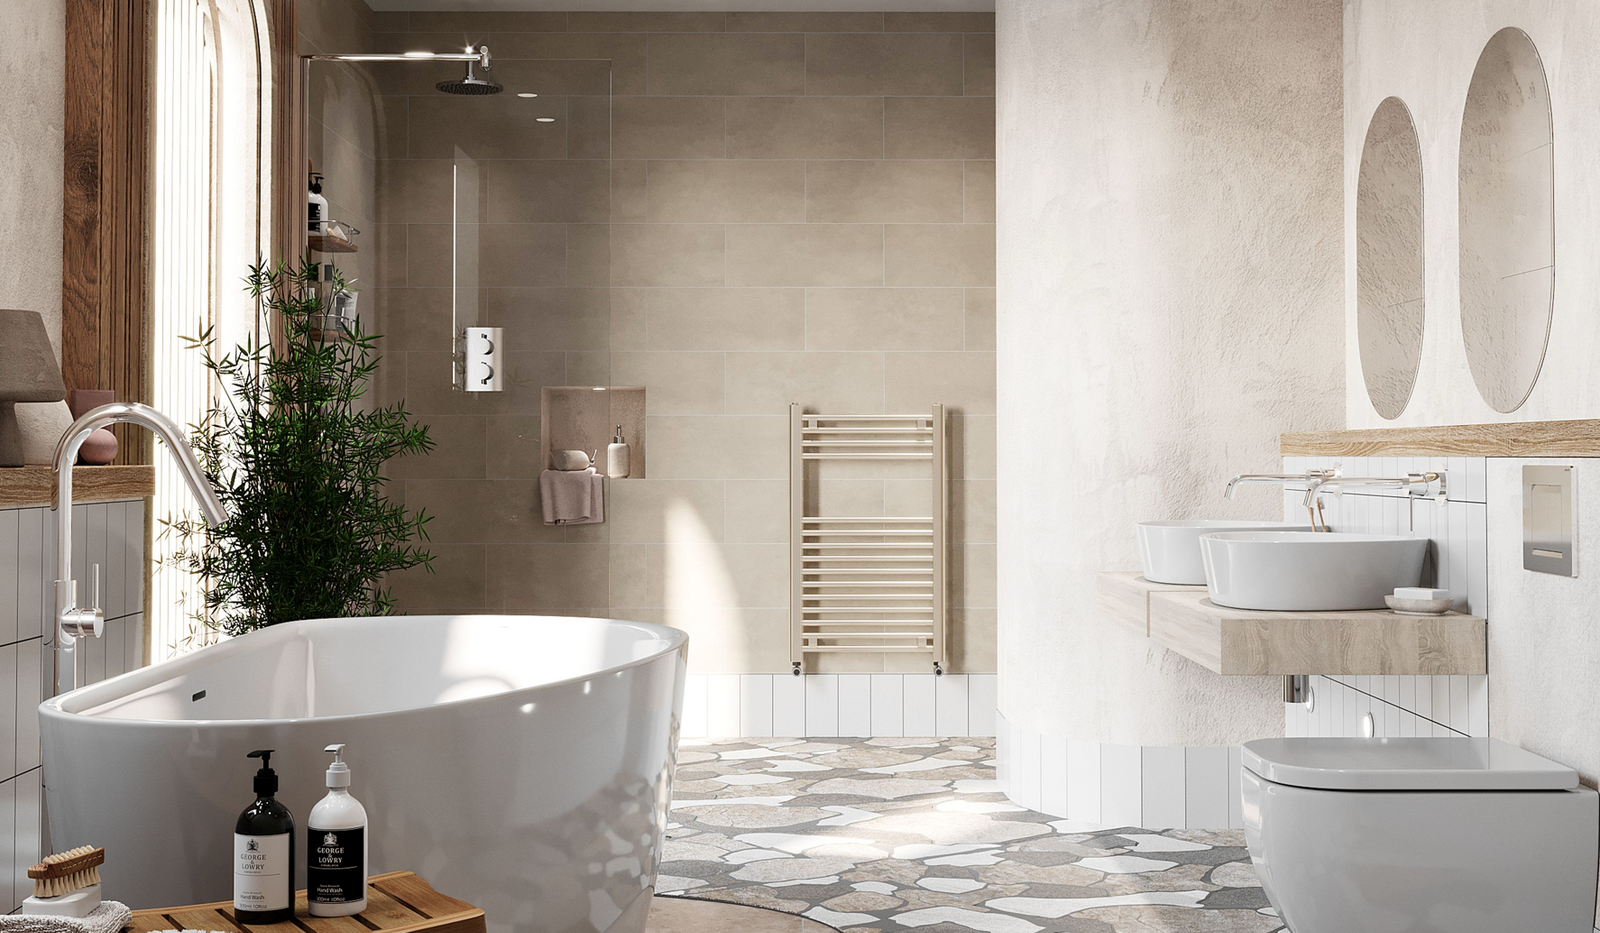 Online bathroom retailer showers
Leeds based Brand-8 PR with success